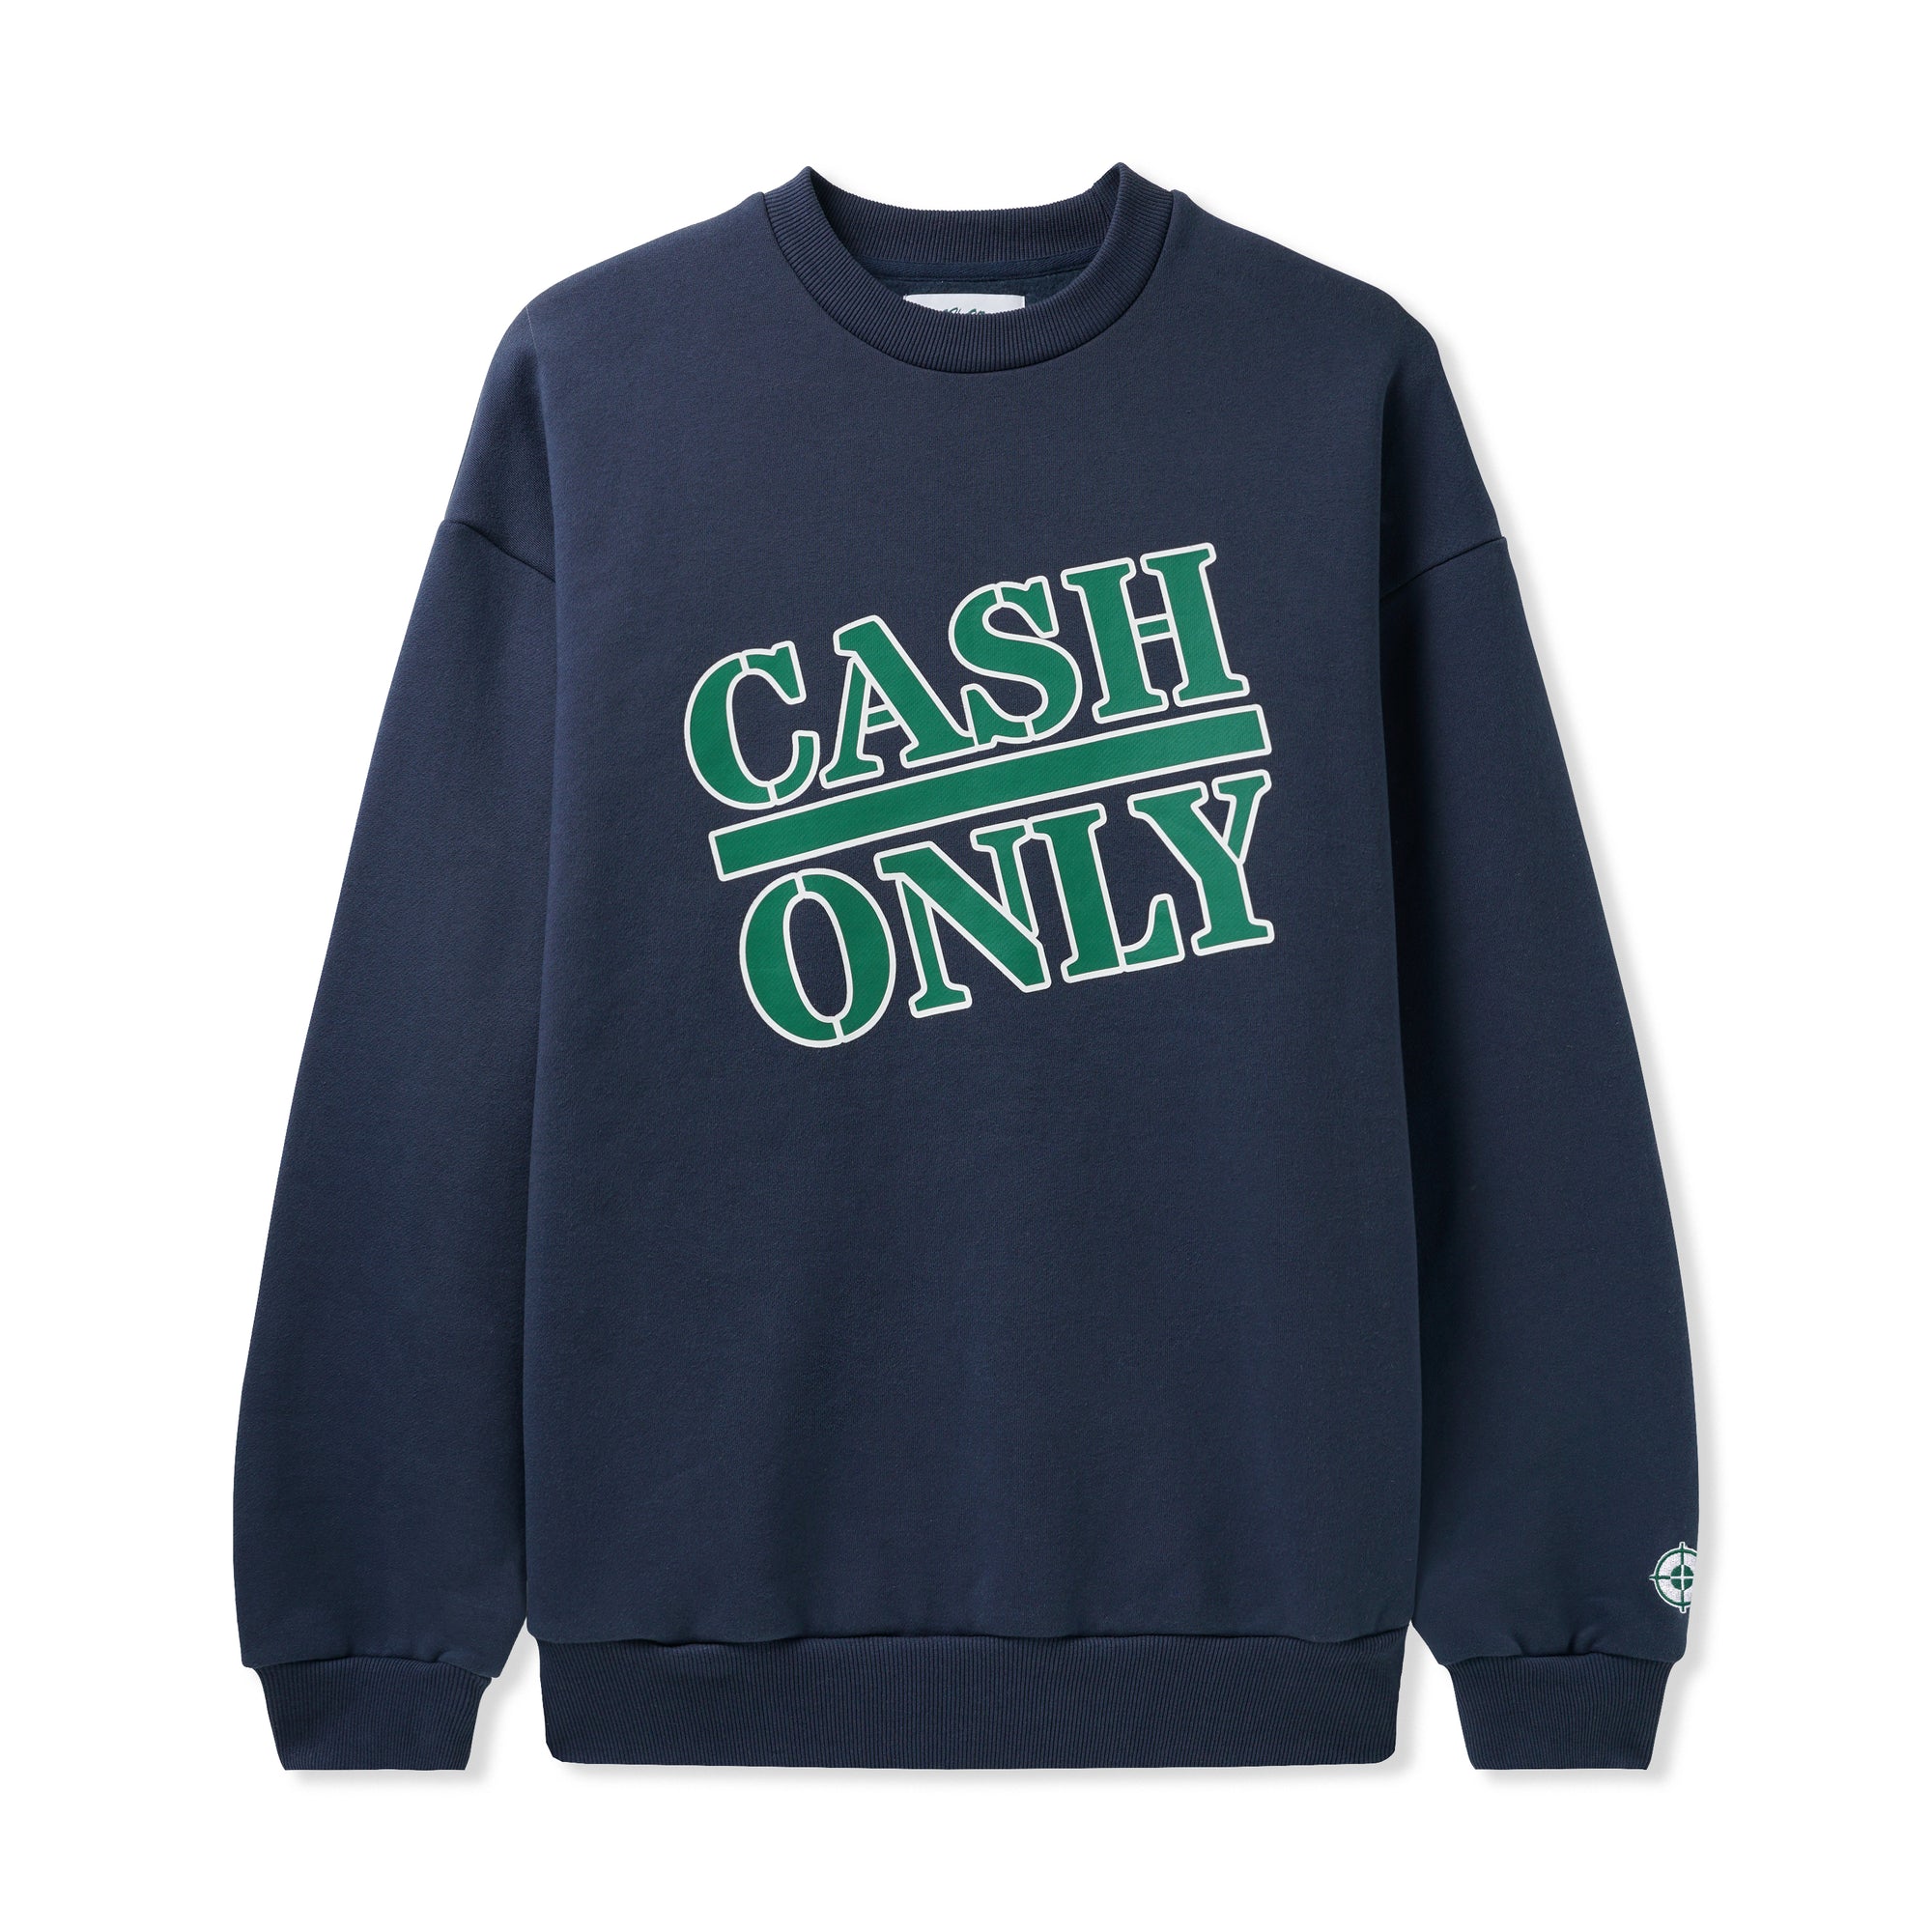 Cash Only Enemy Crewneck Sweatshirt Navy